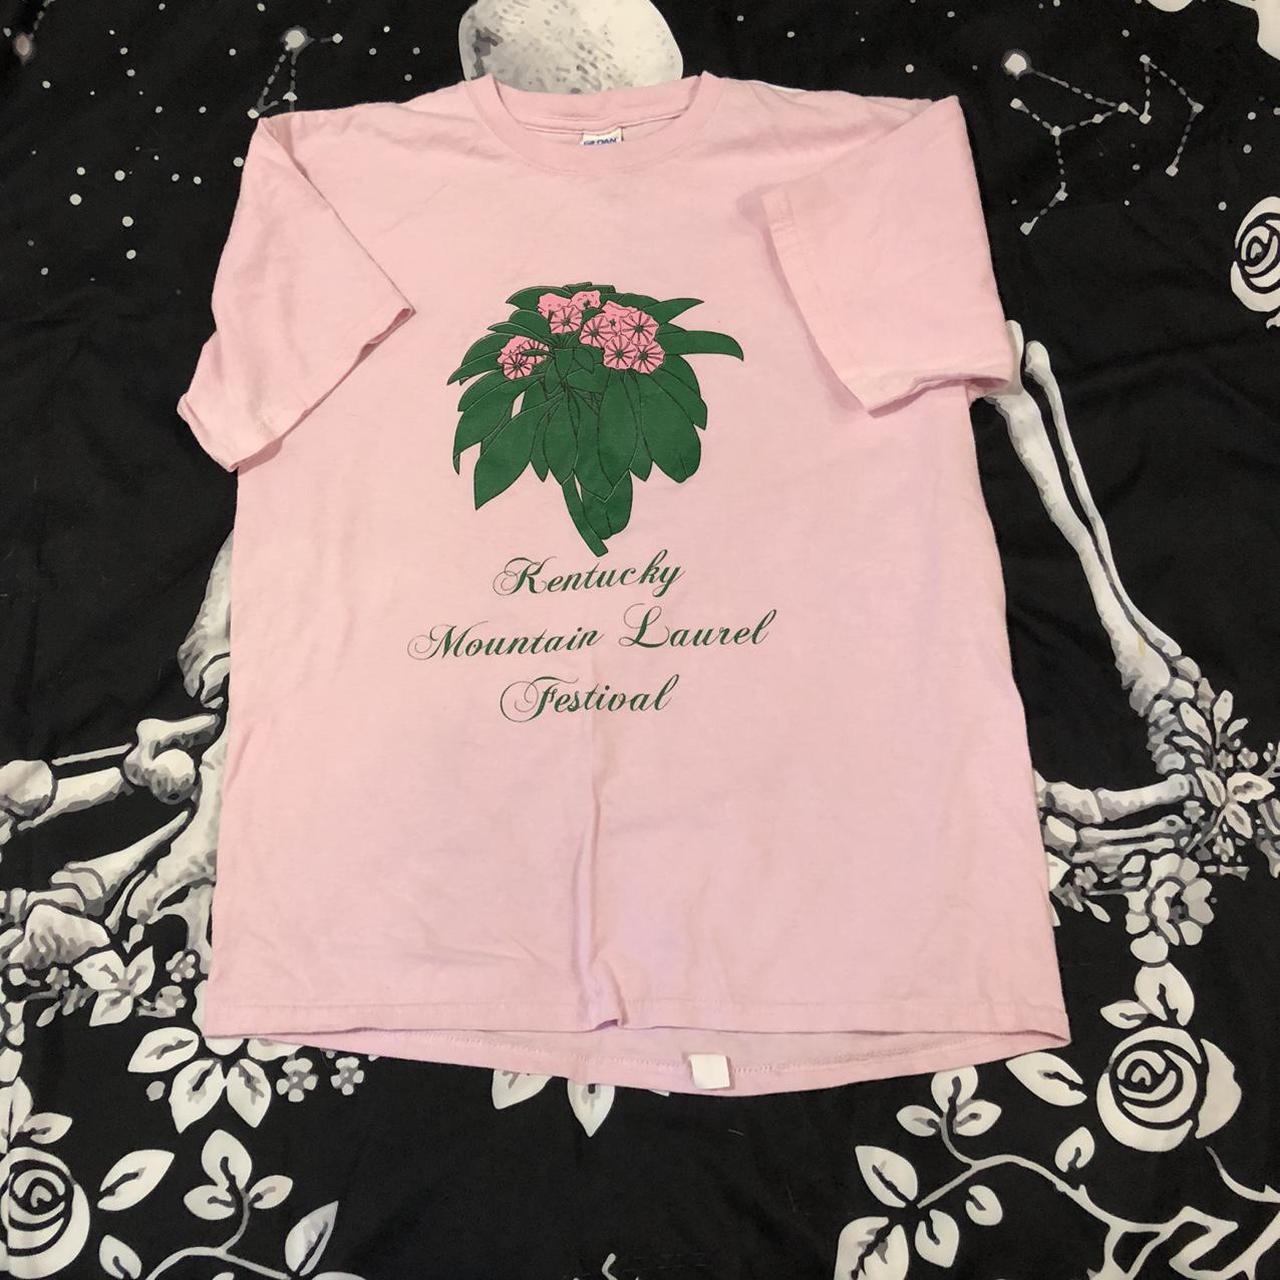 Product Image 1 - Pink tshirt fairycore retro plant